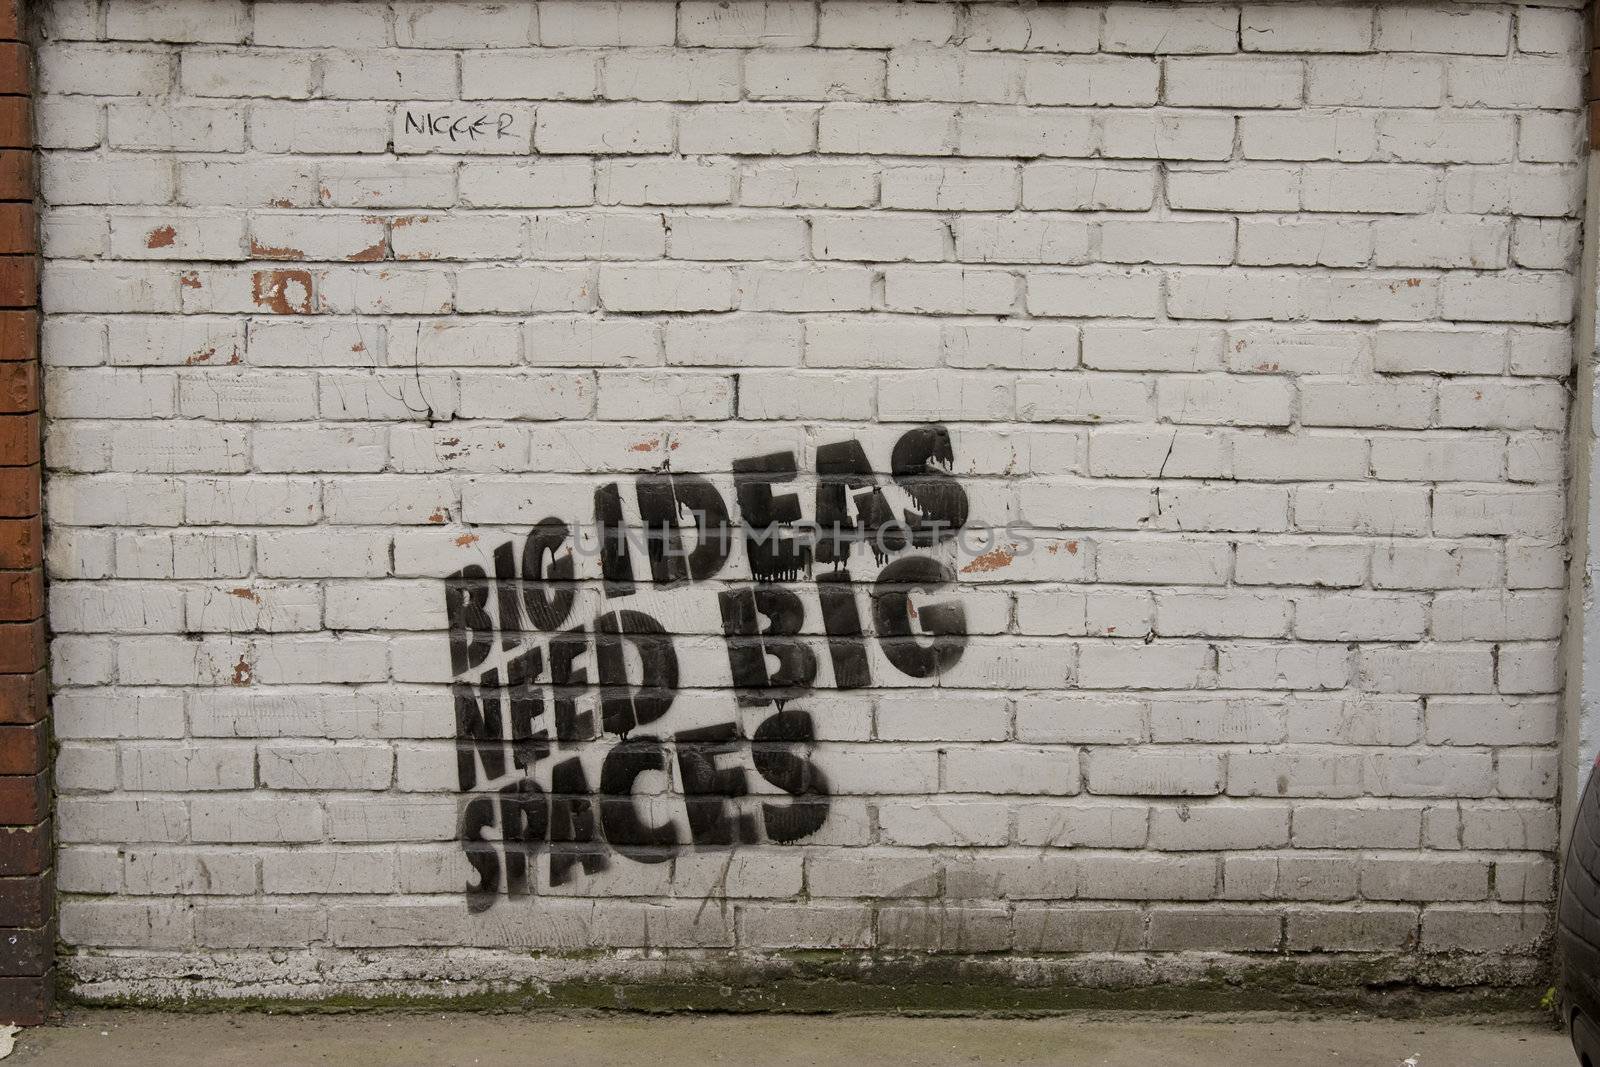 'Big ideas need big spaces' graffiti on a wall